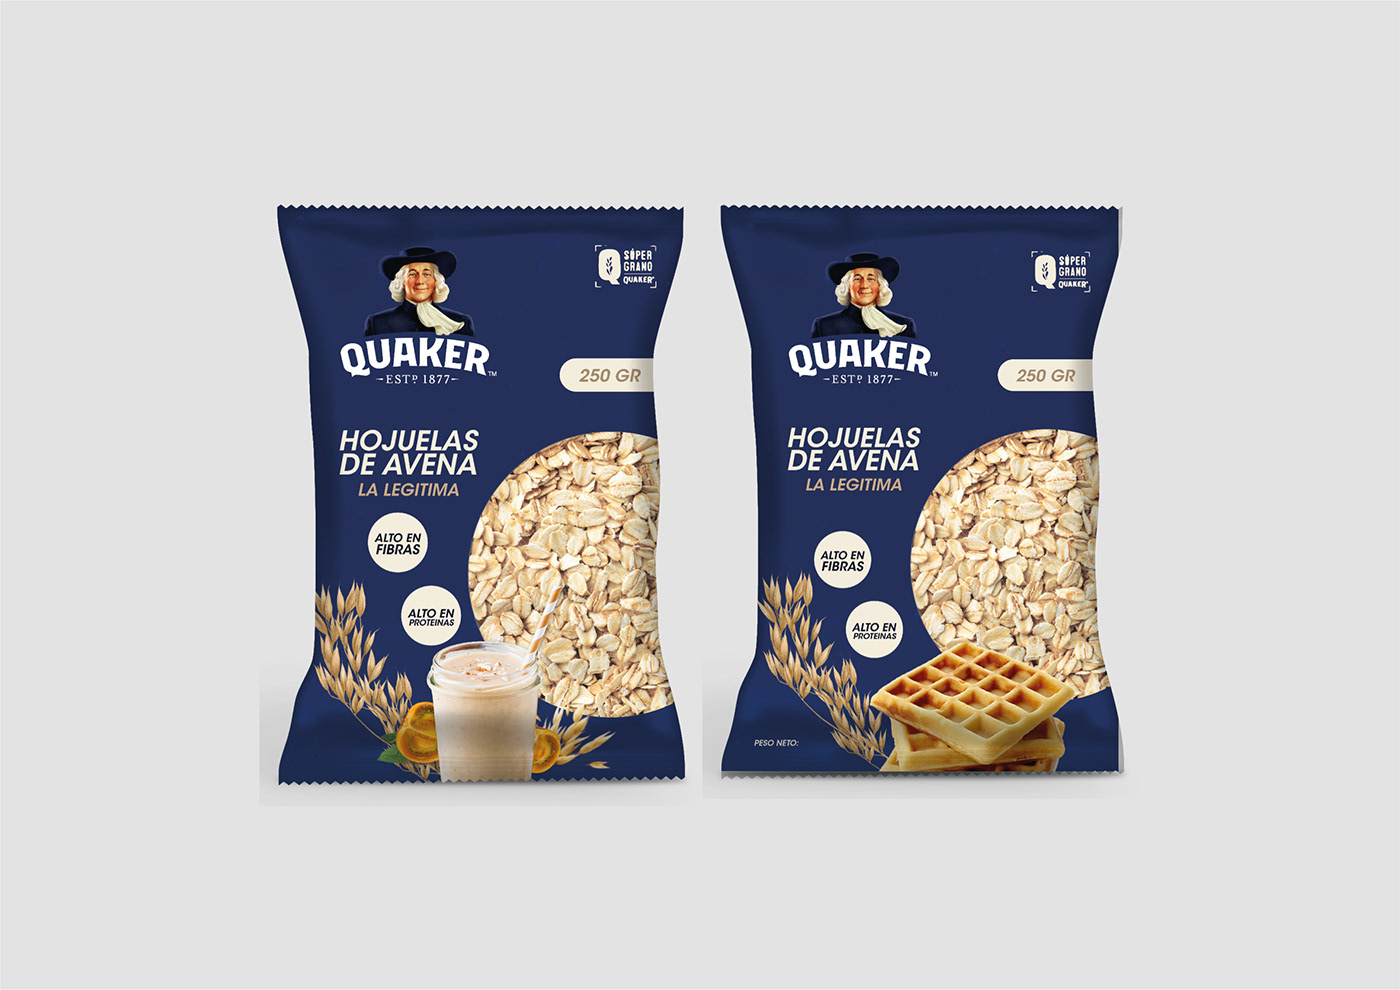 avena oats package packaging design porridge queaker repackaging